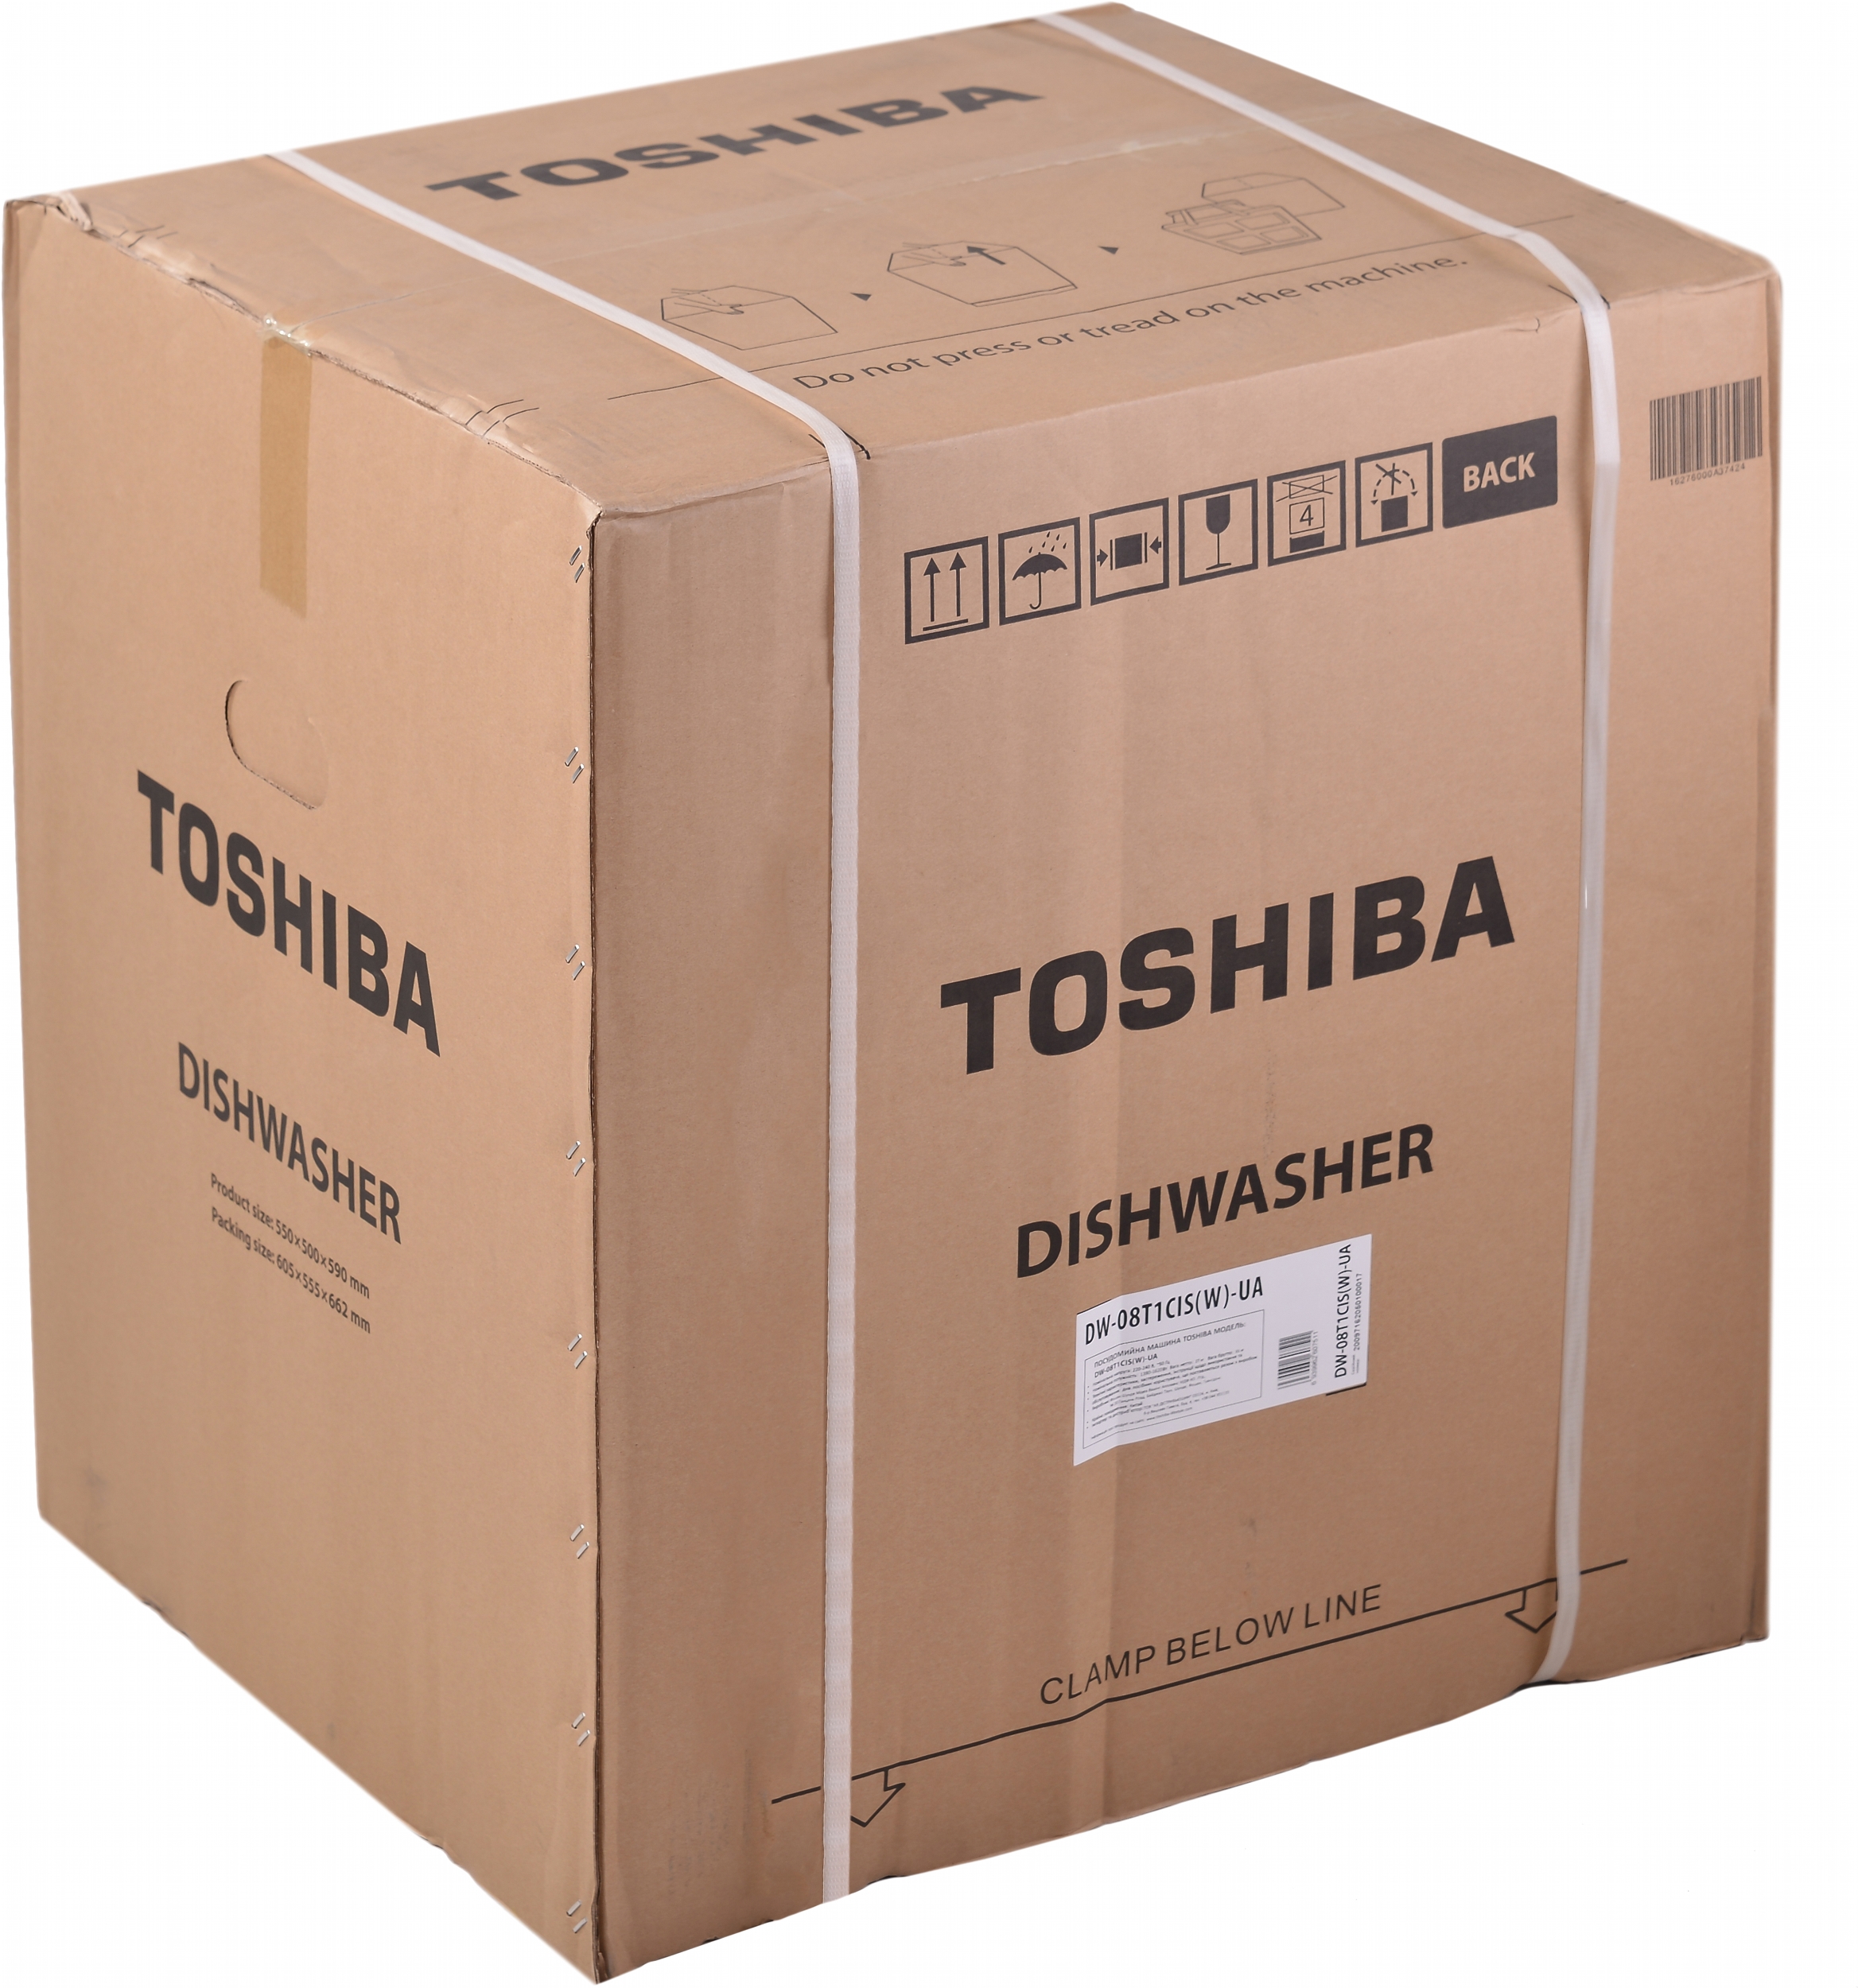 Посудомийна машина Toshiba DW-08T1CIS(W)-UA огляд - фото 8